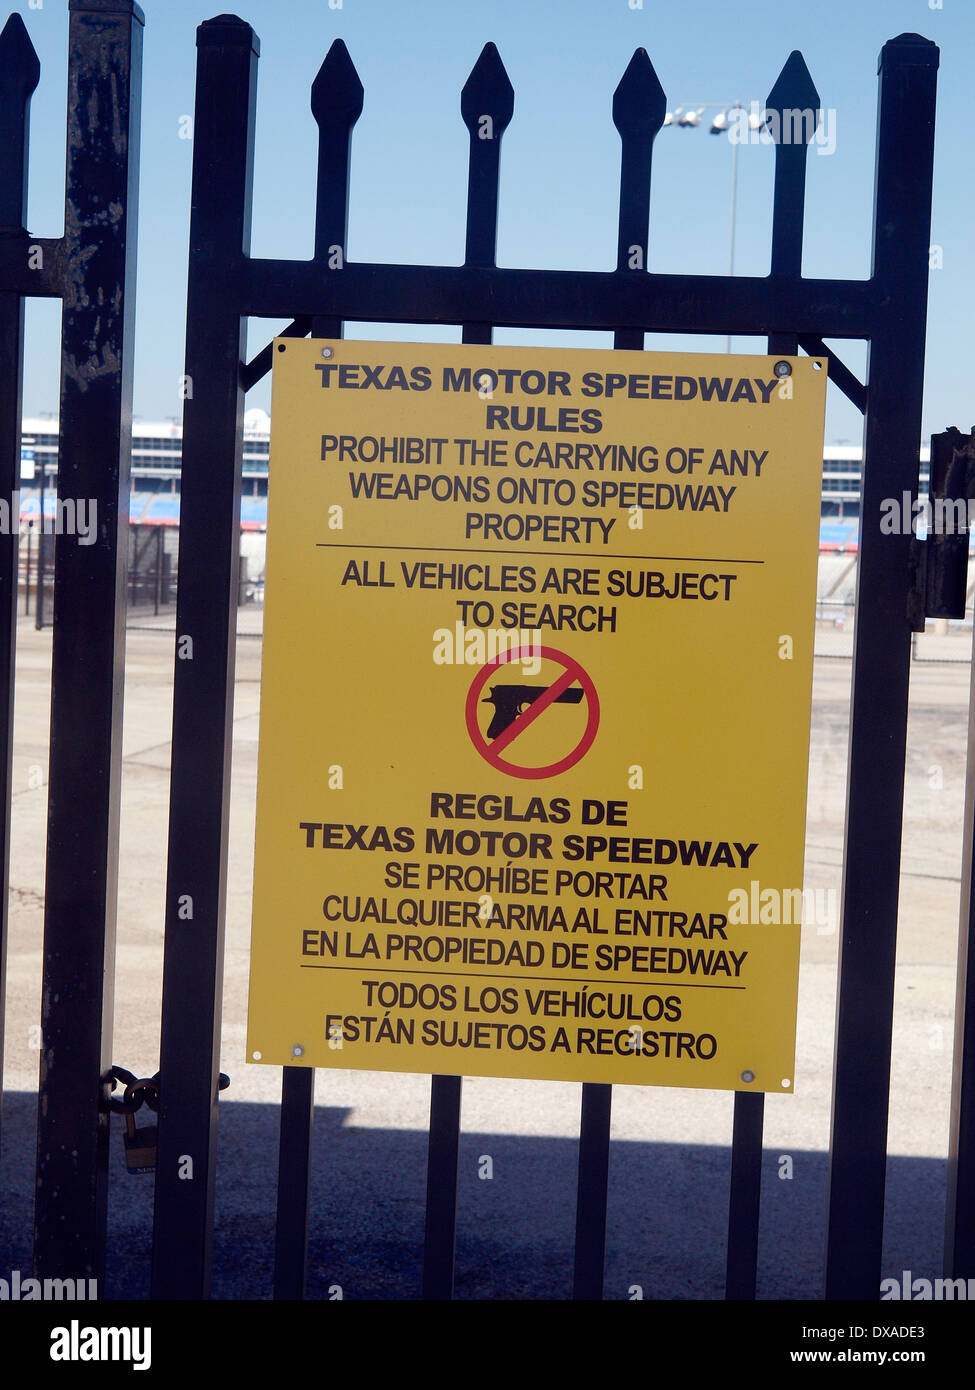 Ft Worth, Tx - anche se la National Rifle Association è uno sponsor, il Texas Motor Speedway vieta le armi. Foto Stock